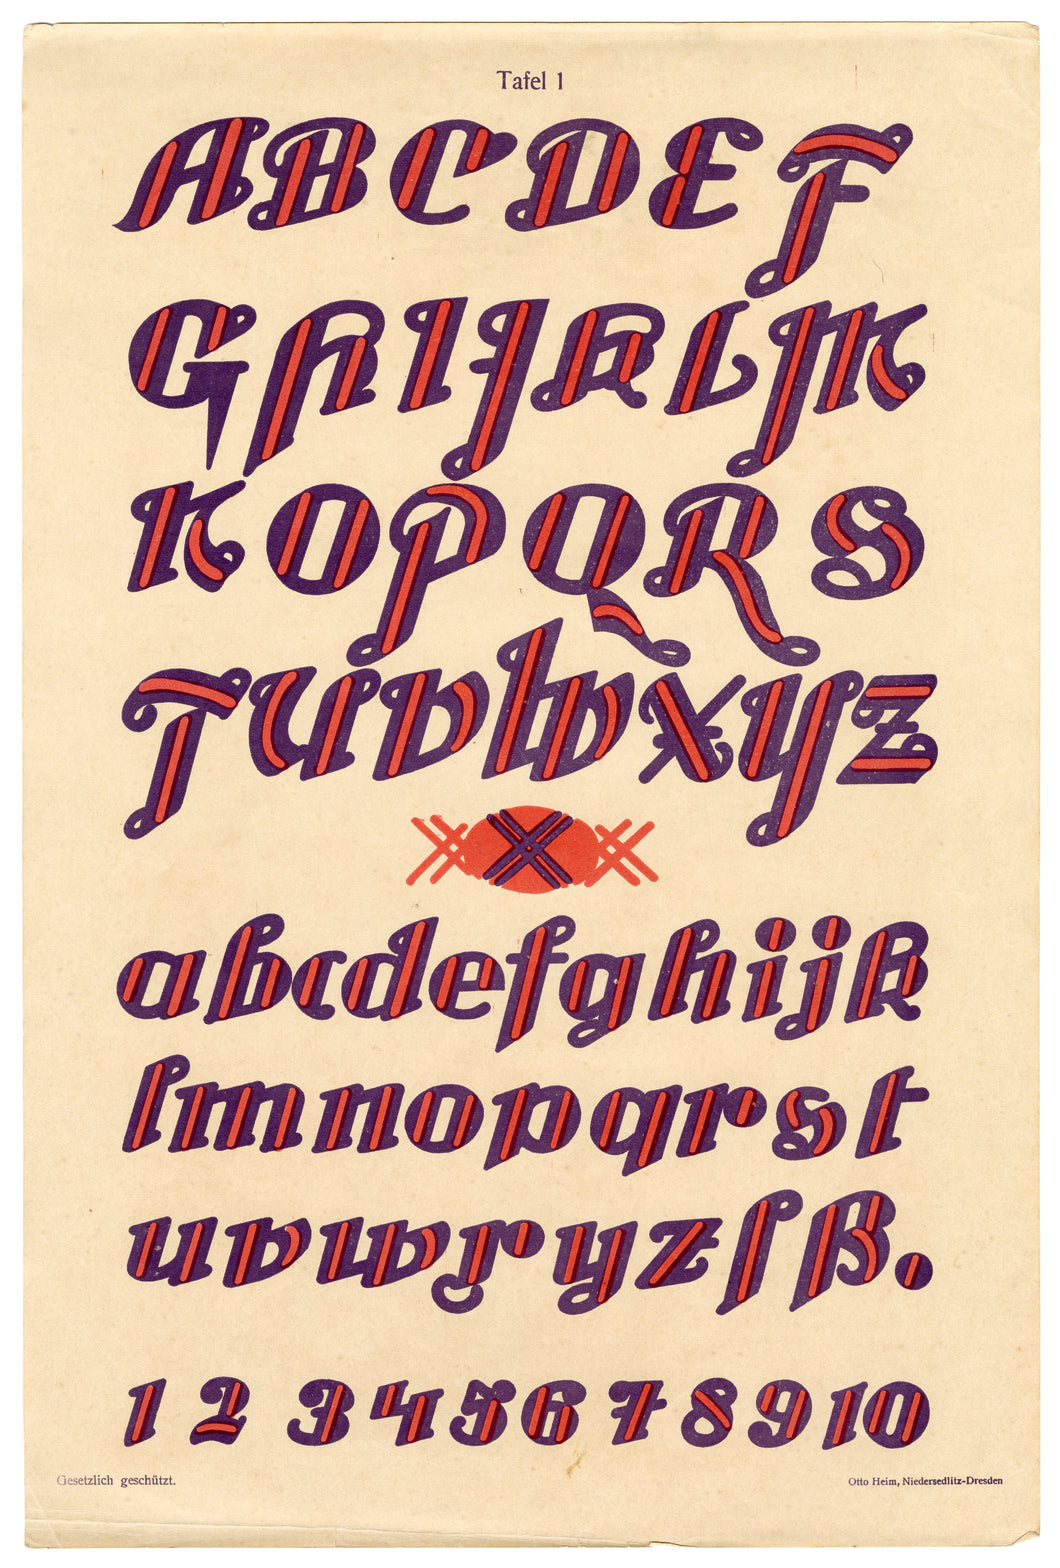 1930's Art Deco Farbige Alphabete Plate 1, Lettering, Typography, Graphic Design